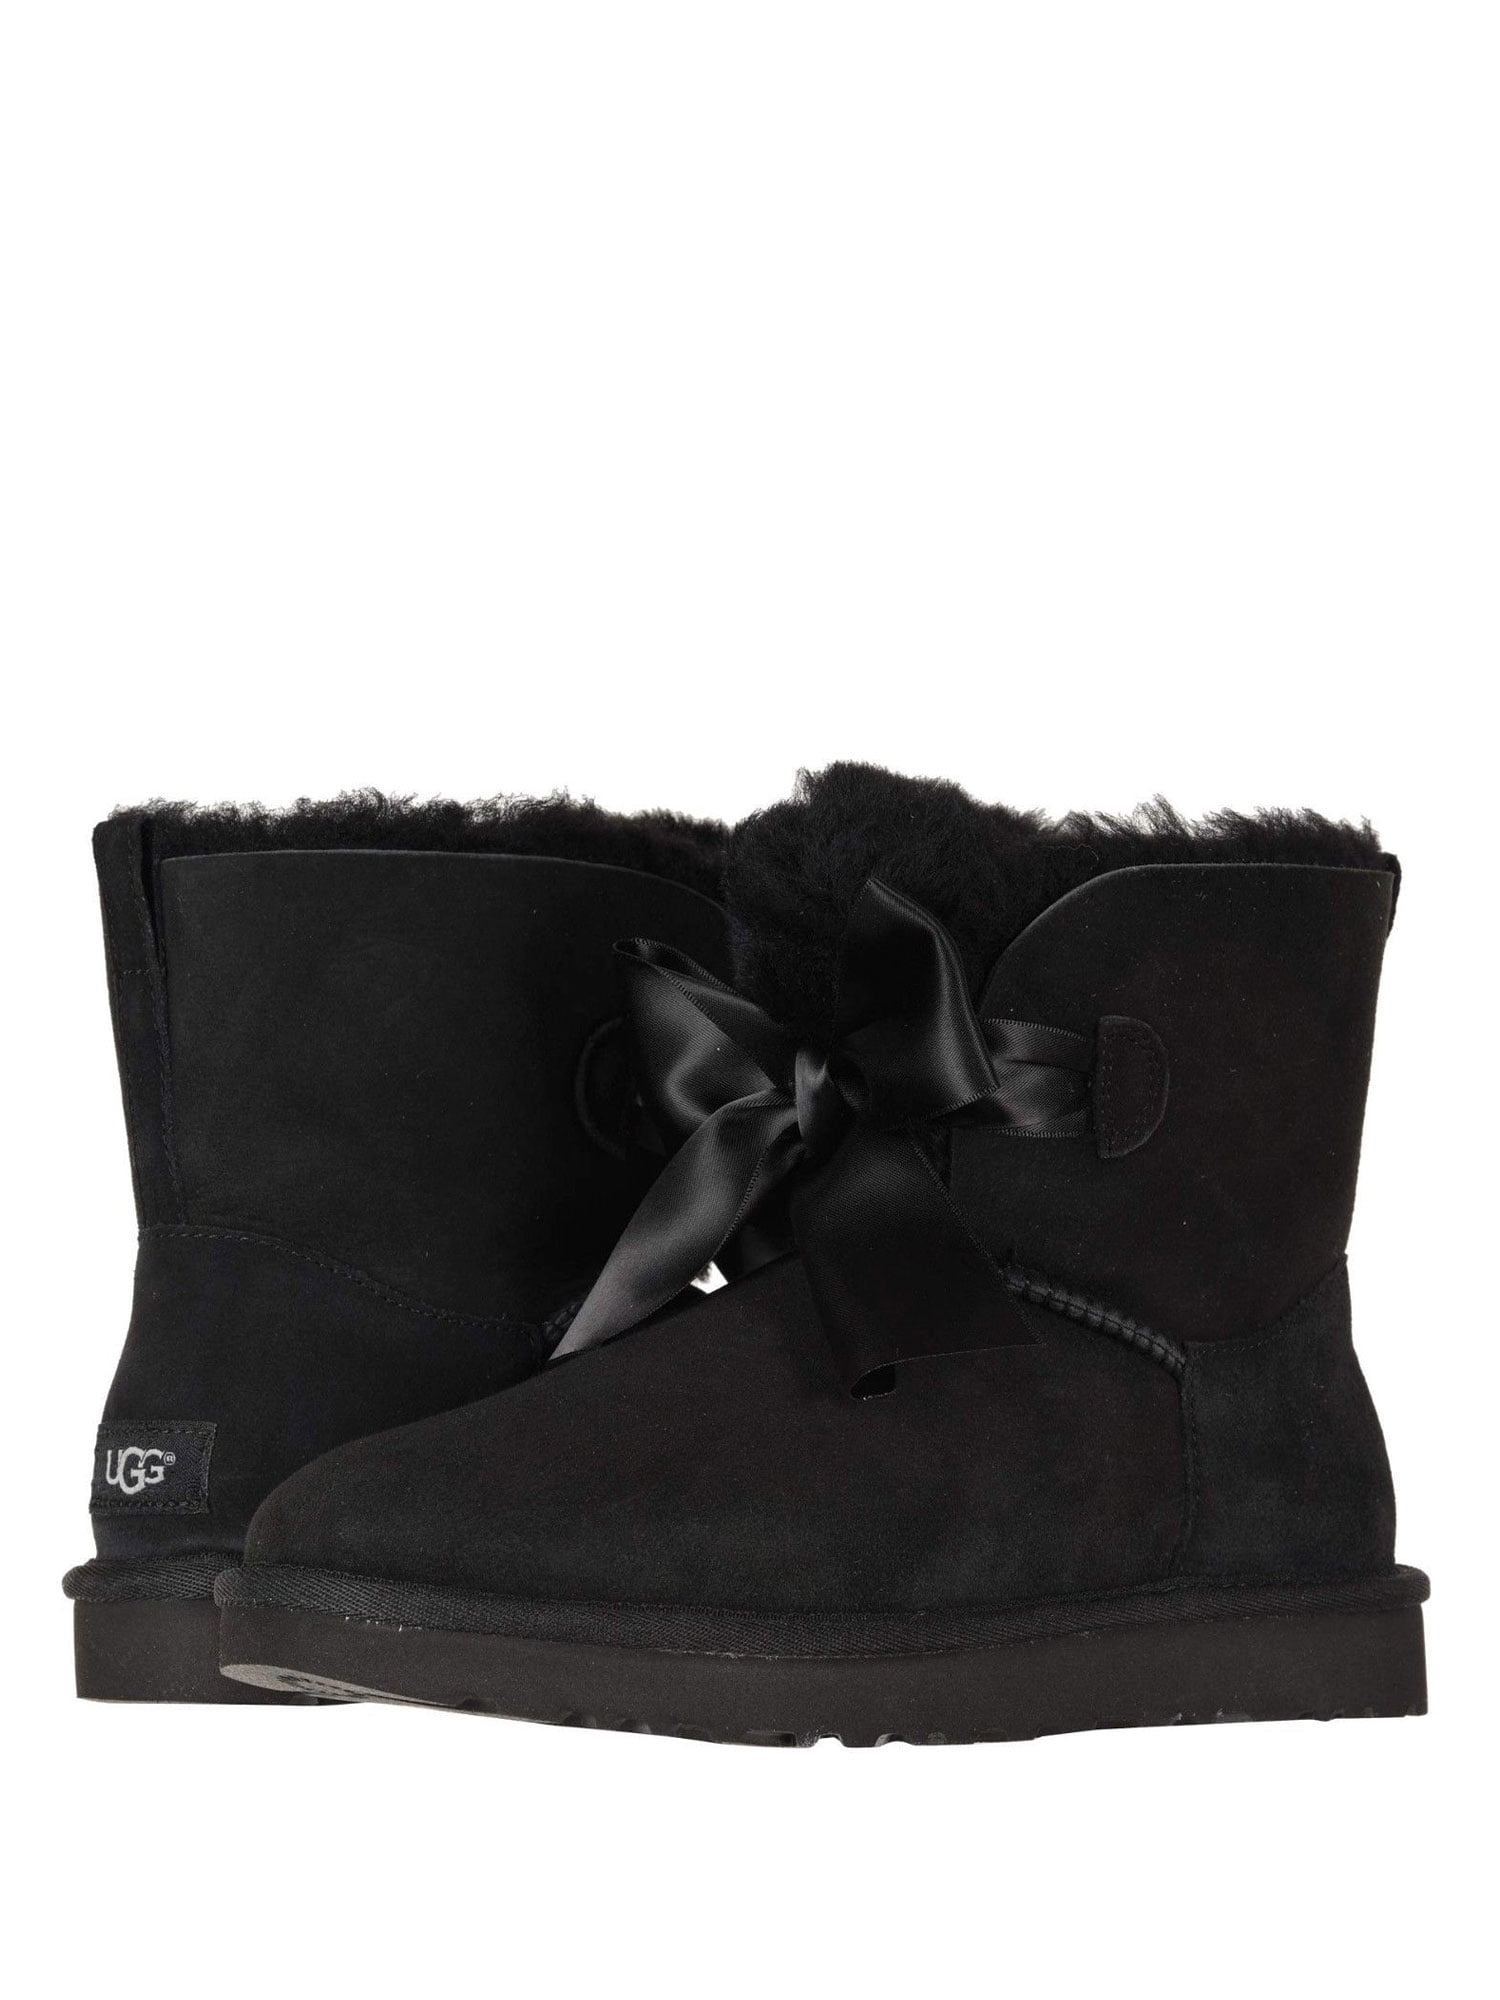 UGG Gita Bow Mini Women's Twinface Boots 1098360 - Walmart.com